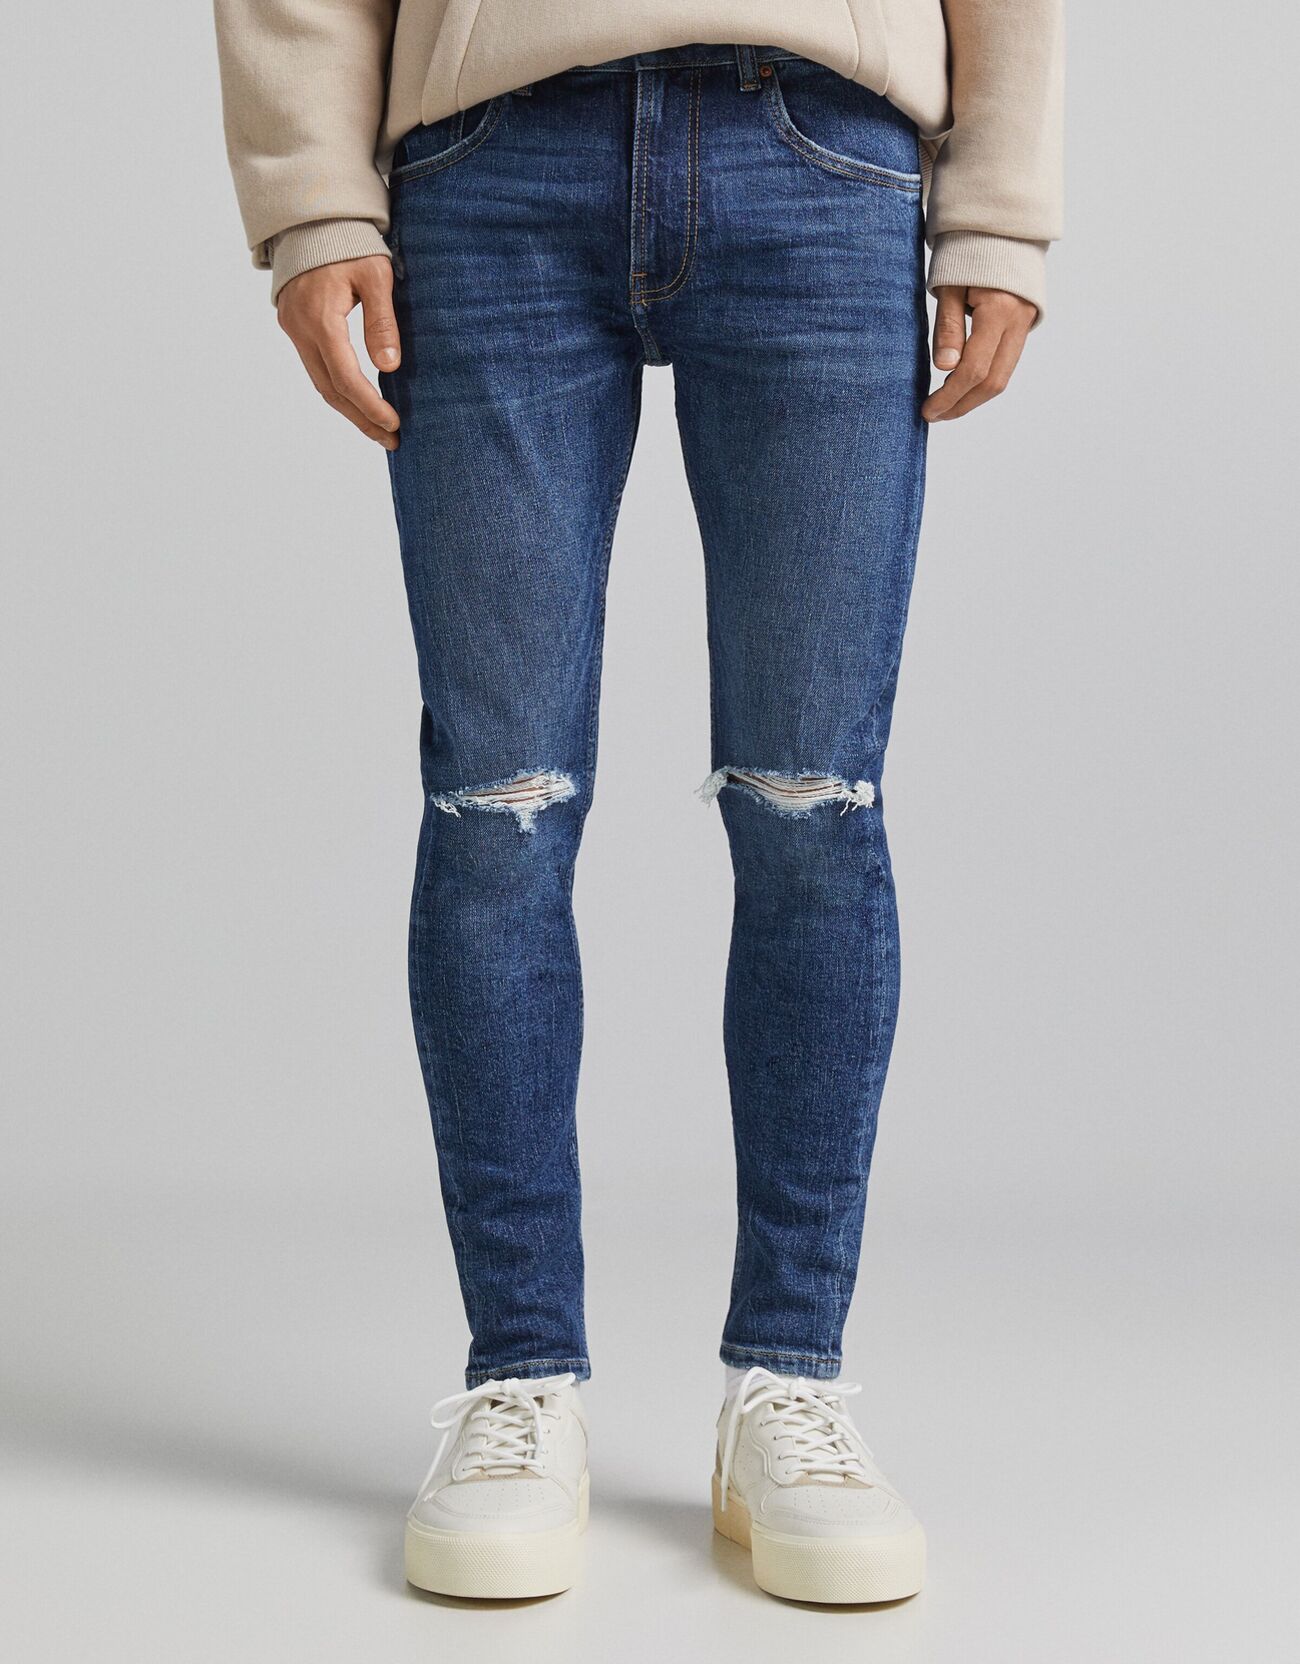 Bershka Jeans Super Skinny Fit Com Rasgões Homem 44 Azul